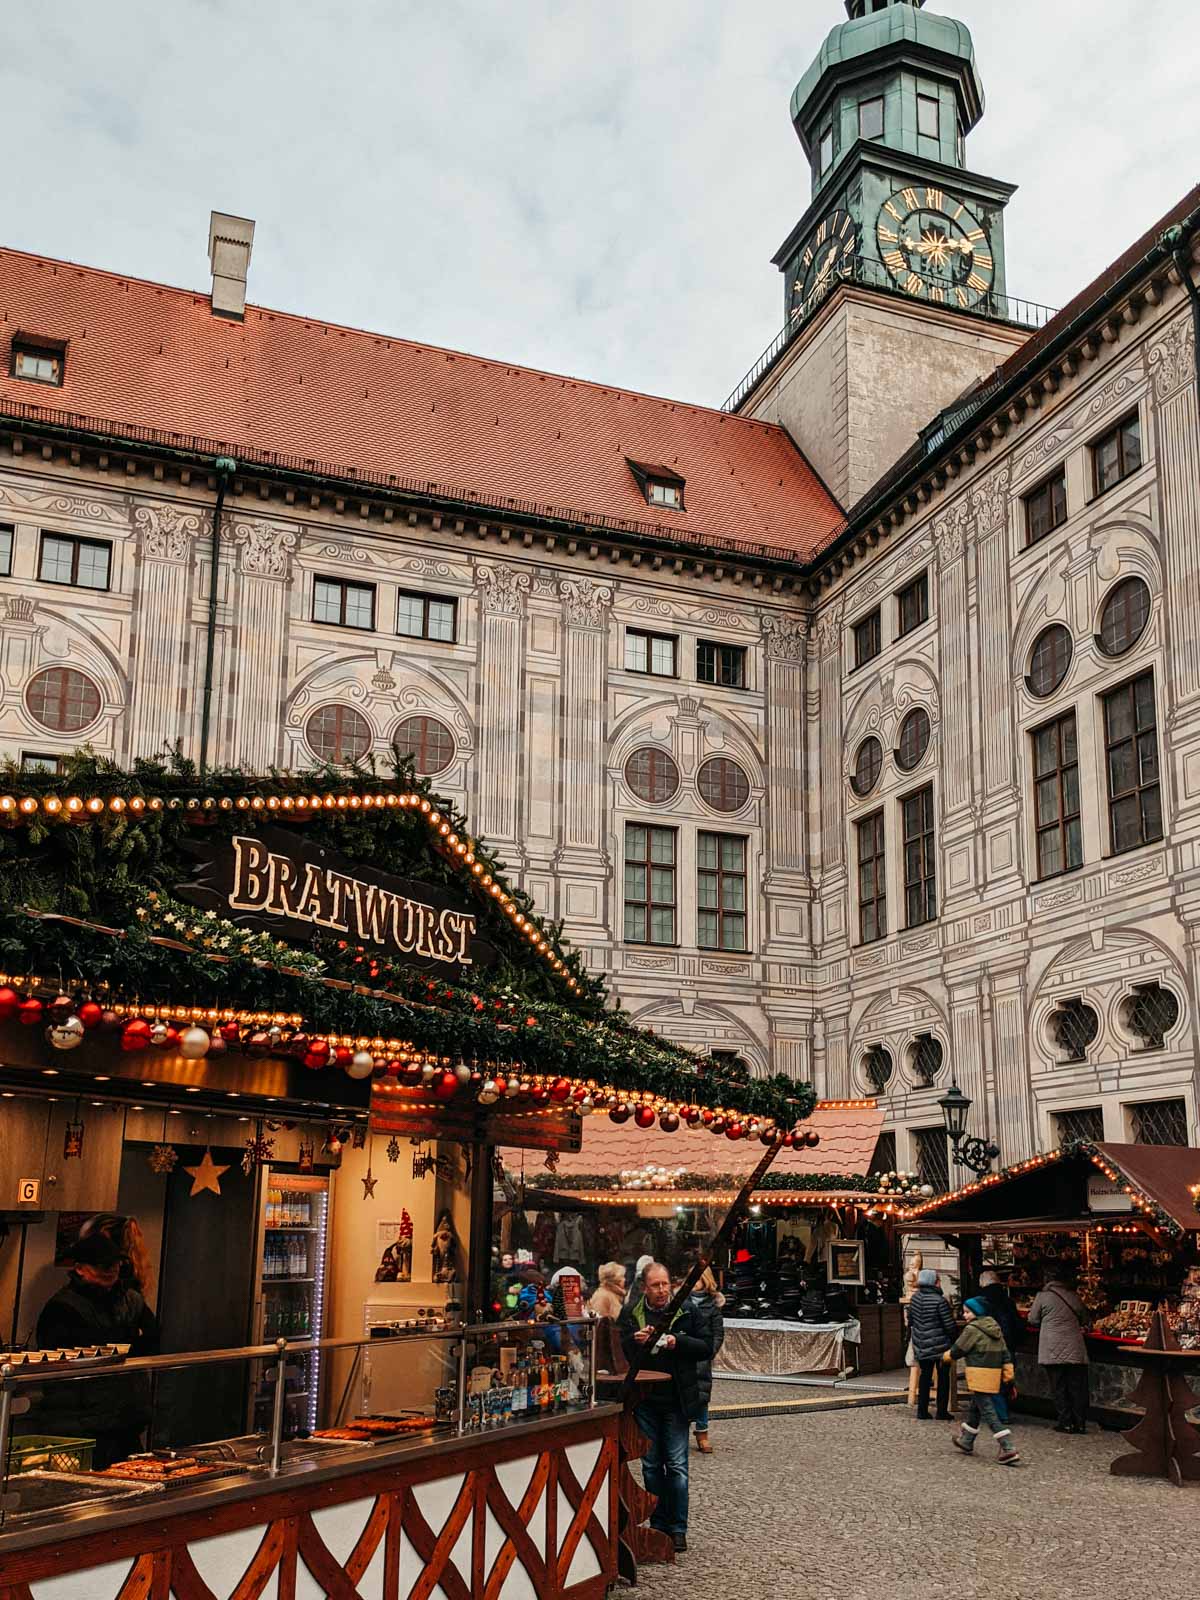 Courtyard German Christmas market in Munich with stall serving bratwurst.